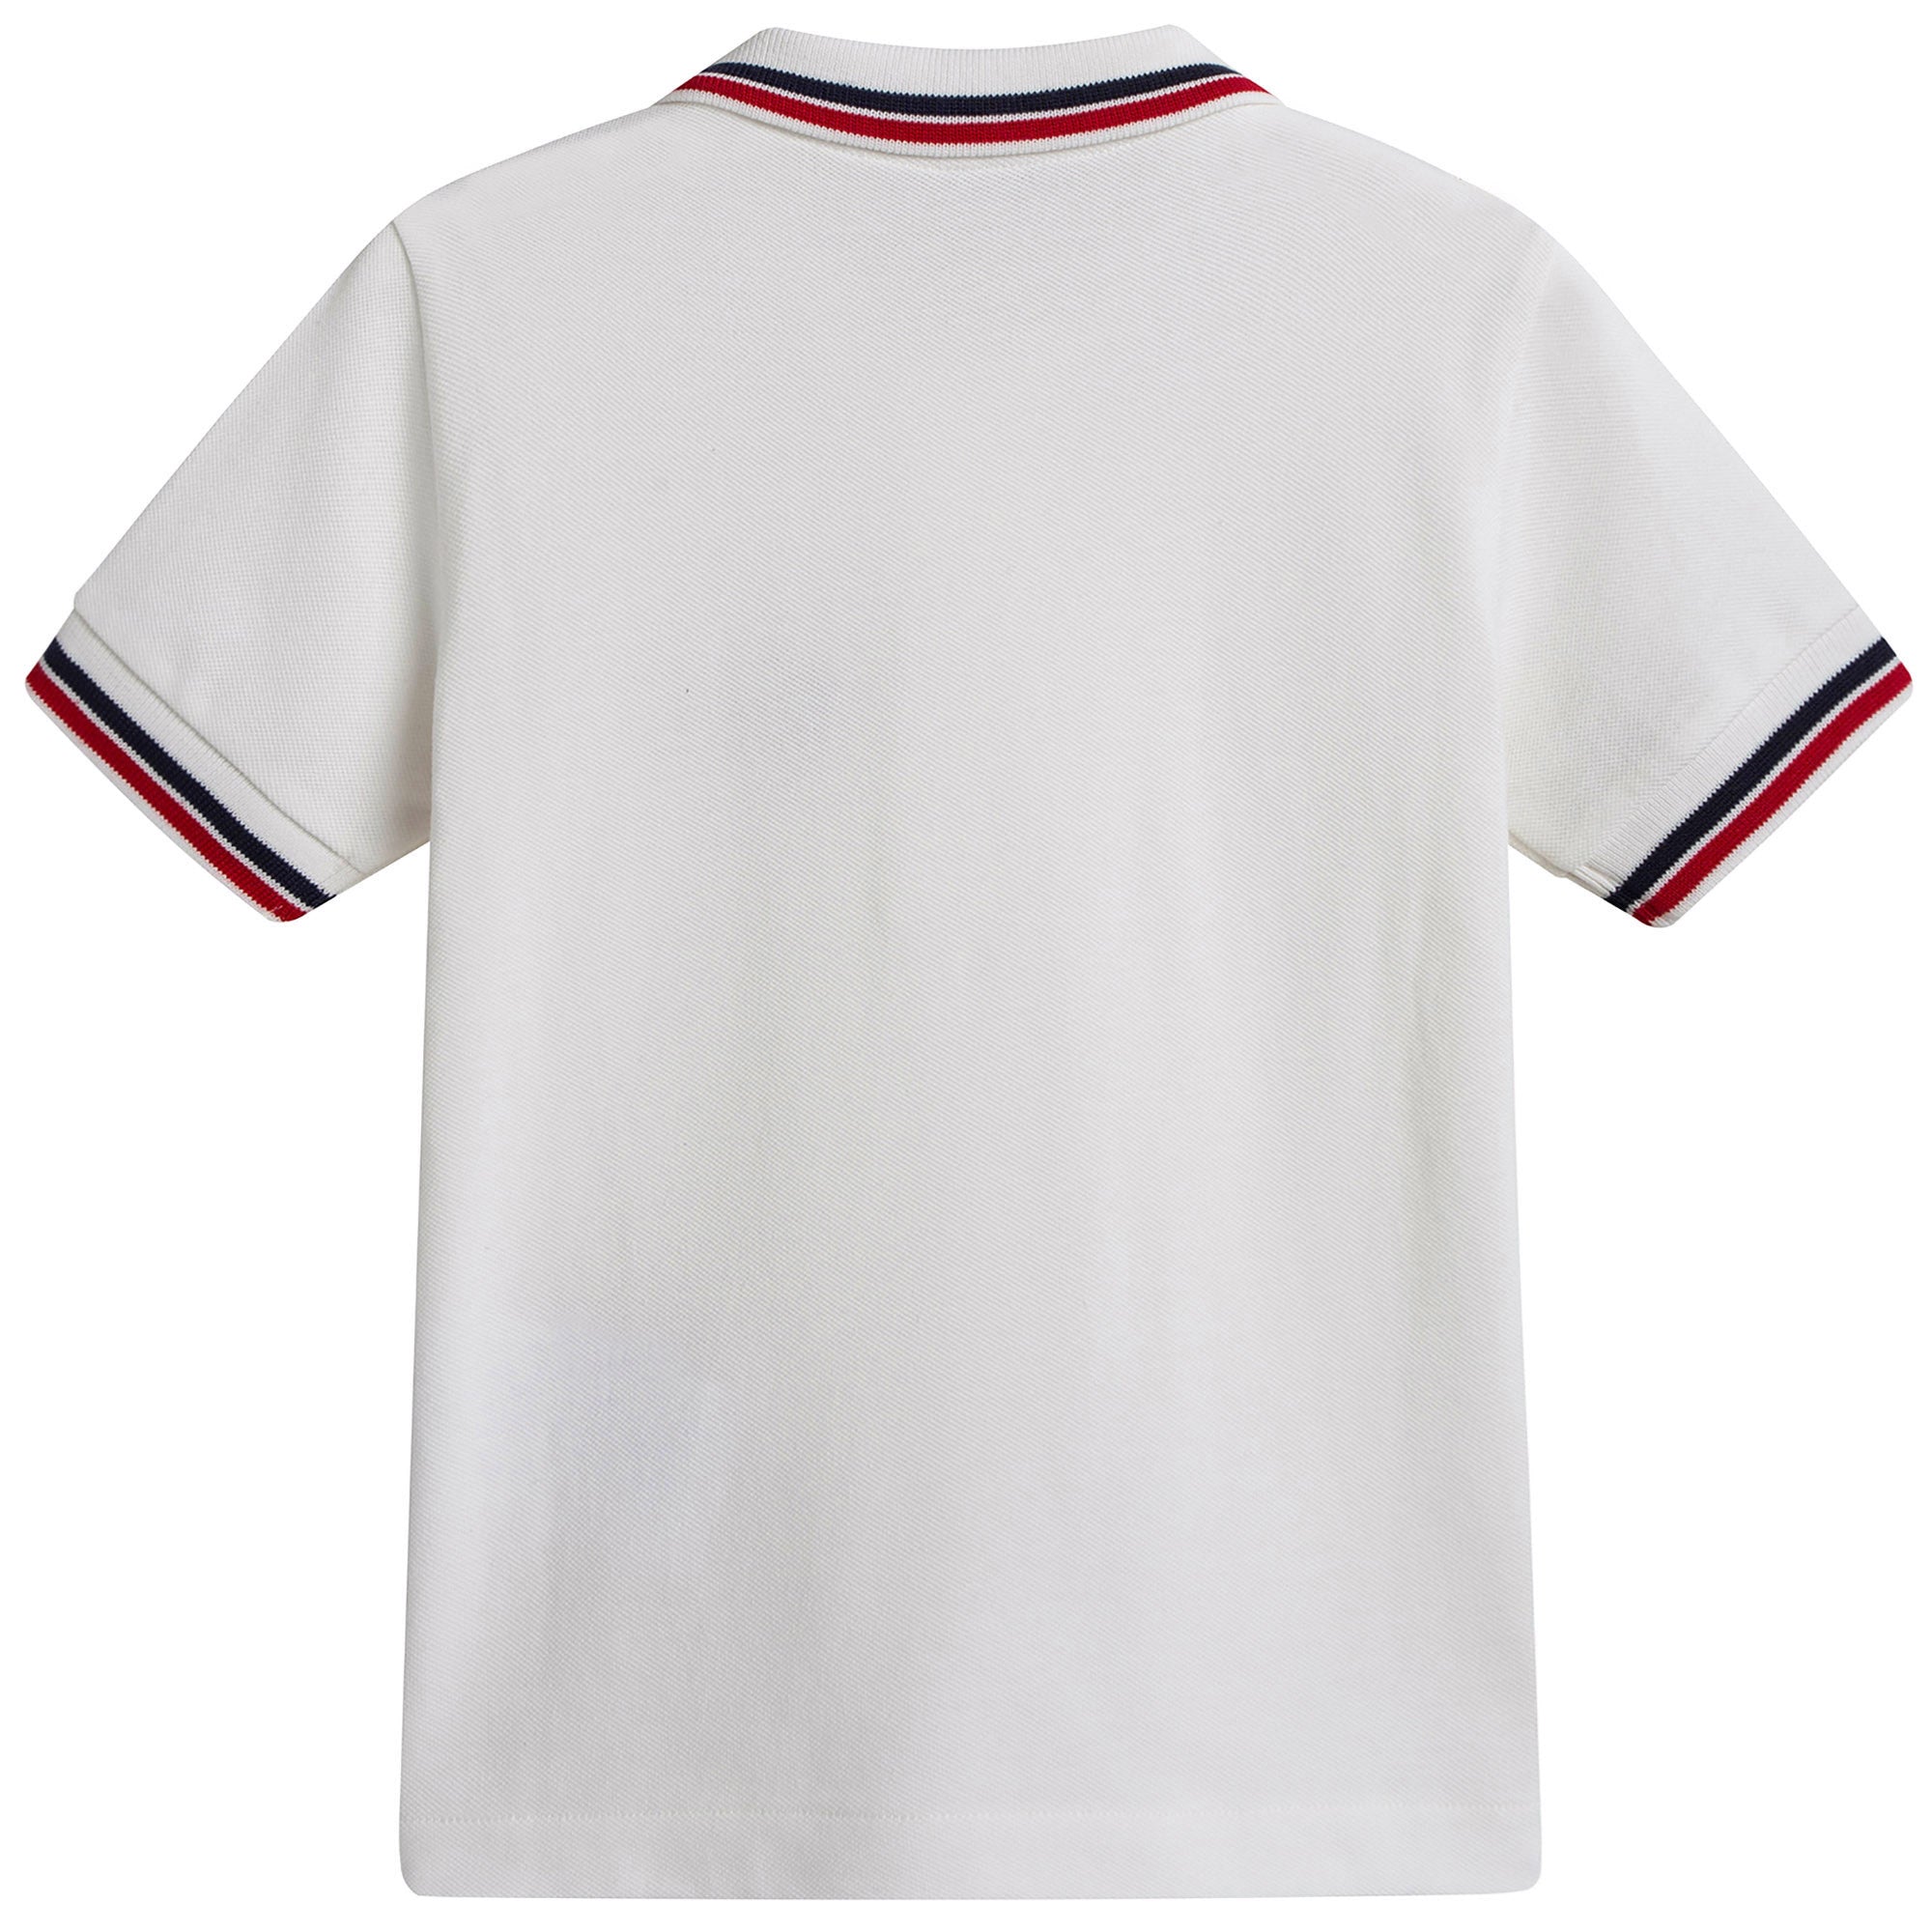 Boys White Polo Shirt With Pocket